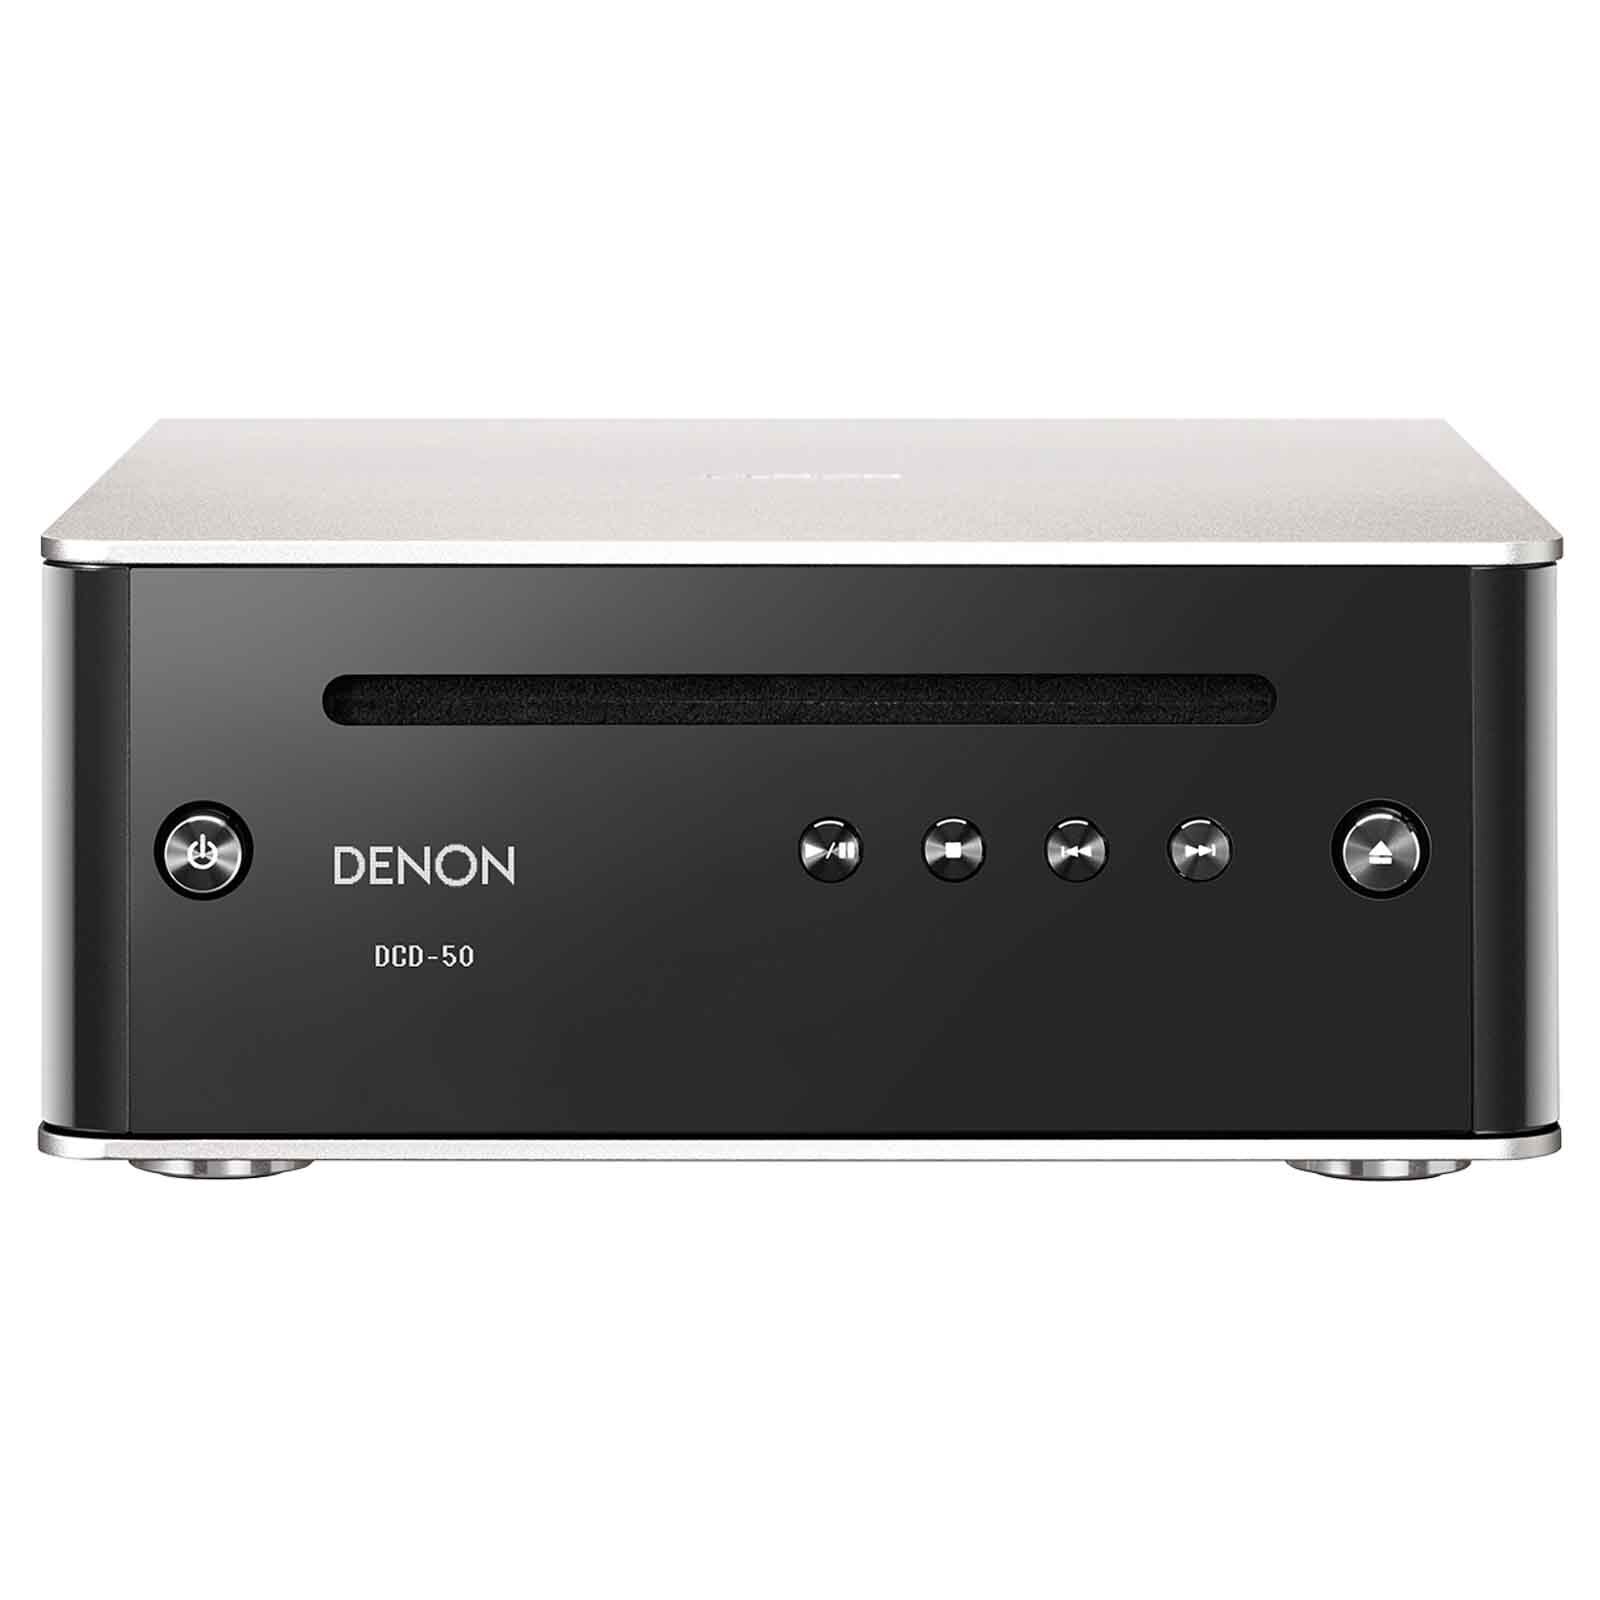 Đầu CD Denon DCD-50